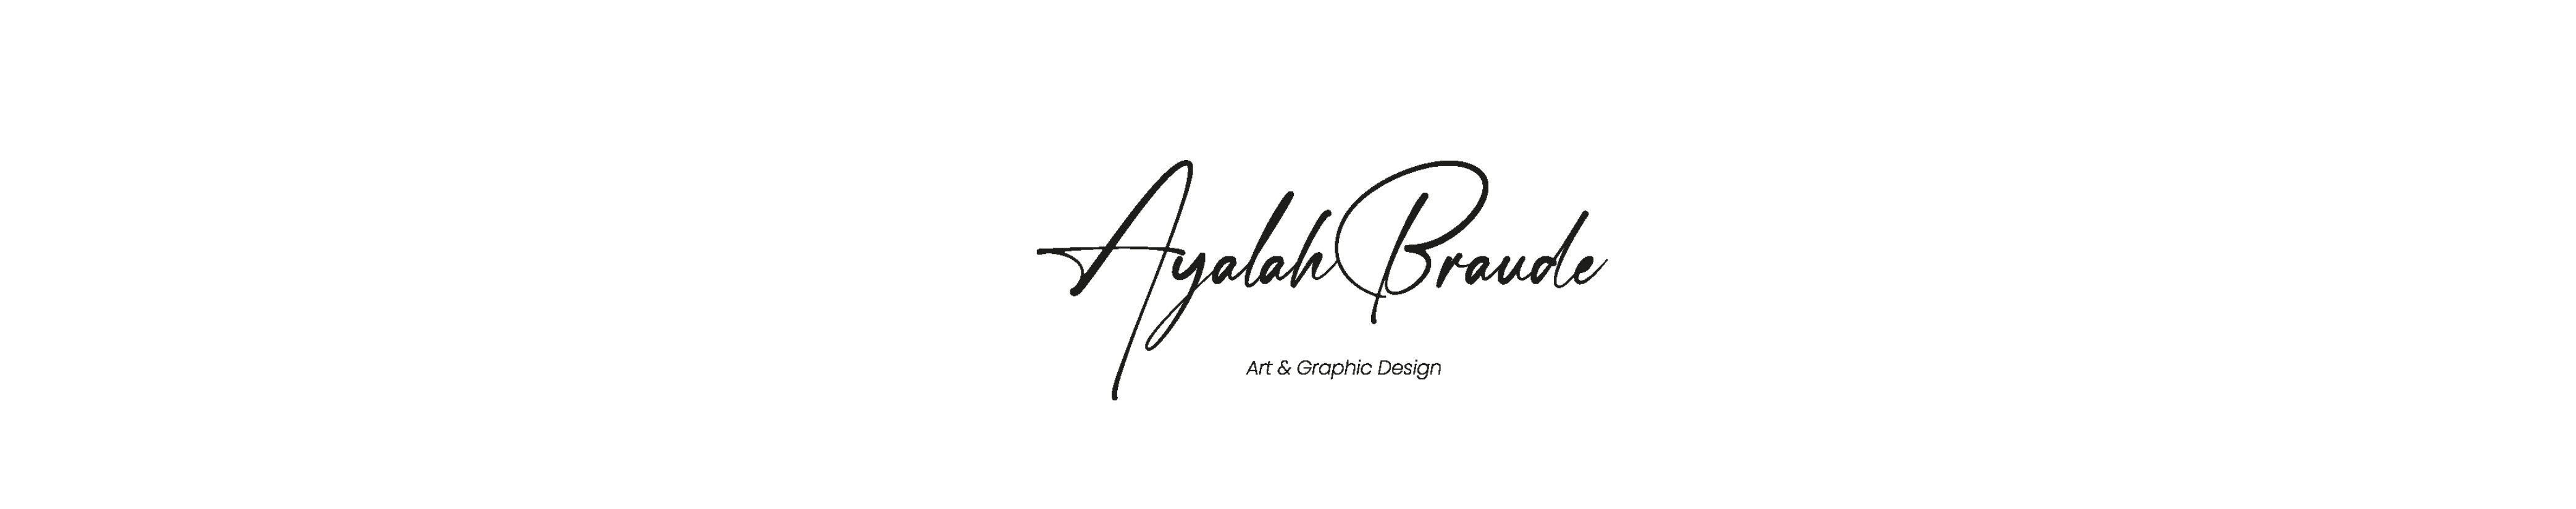 Banner de perfil de Ayalah Braude